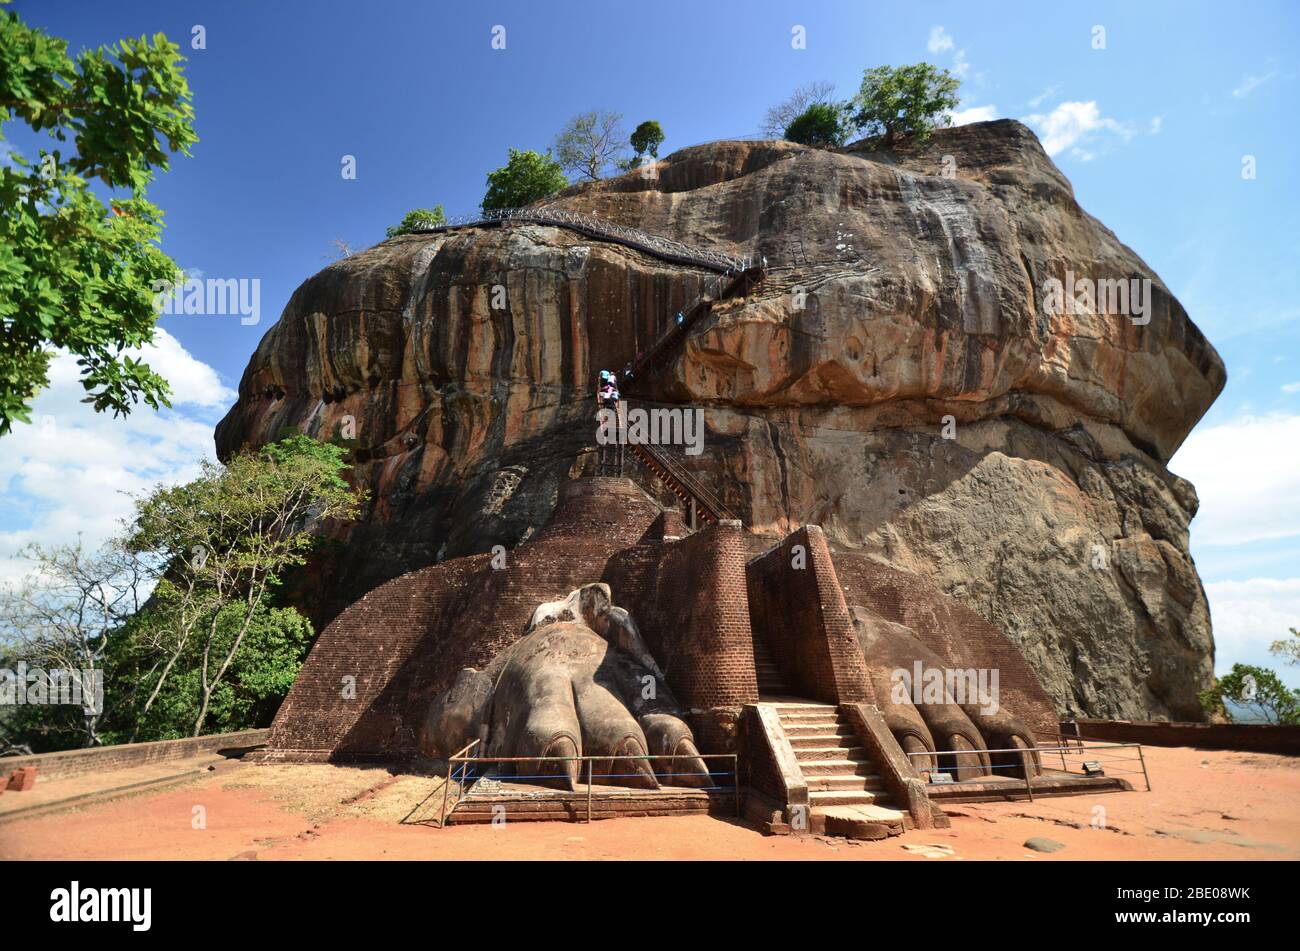 Sigiriya Lion Rock High Resolution Stock Photography And Images Alamy